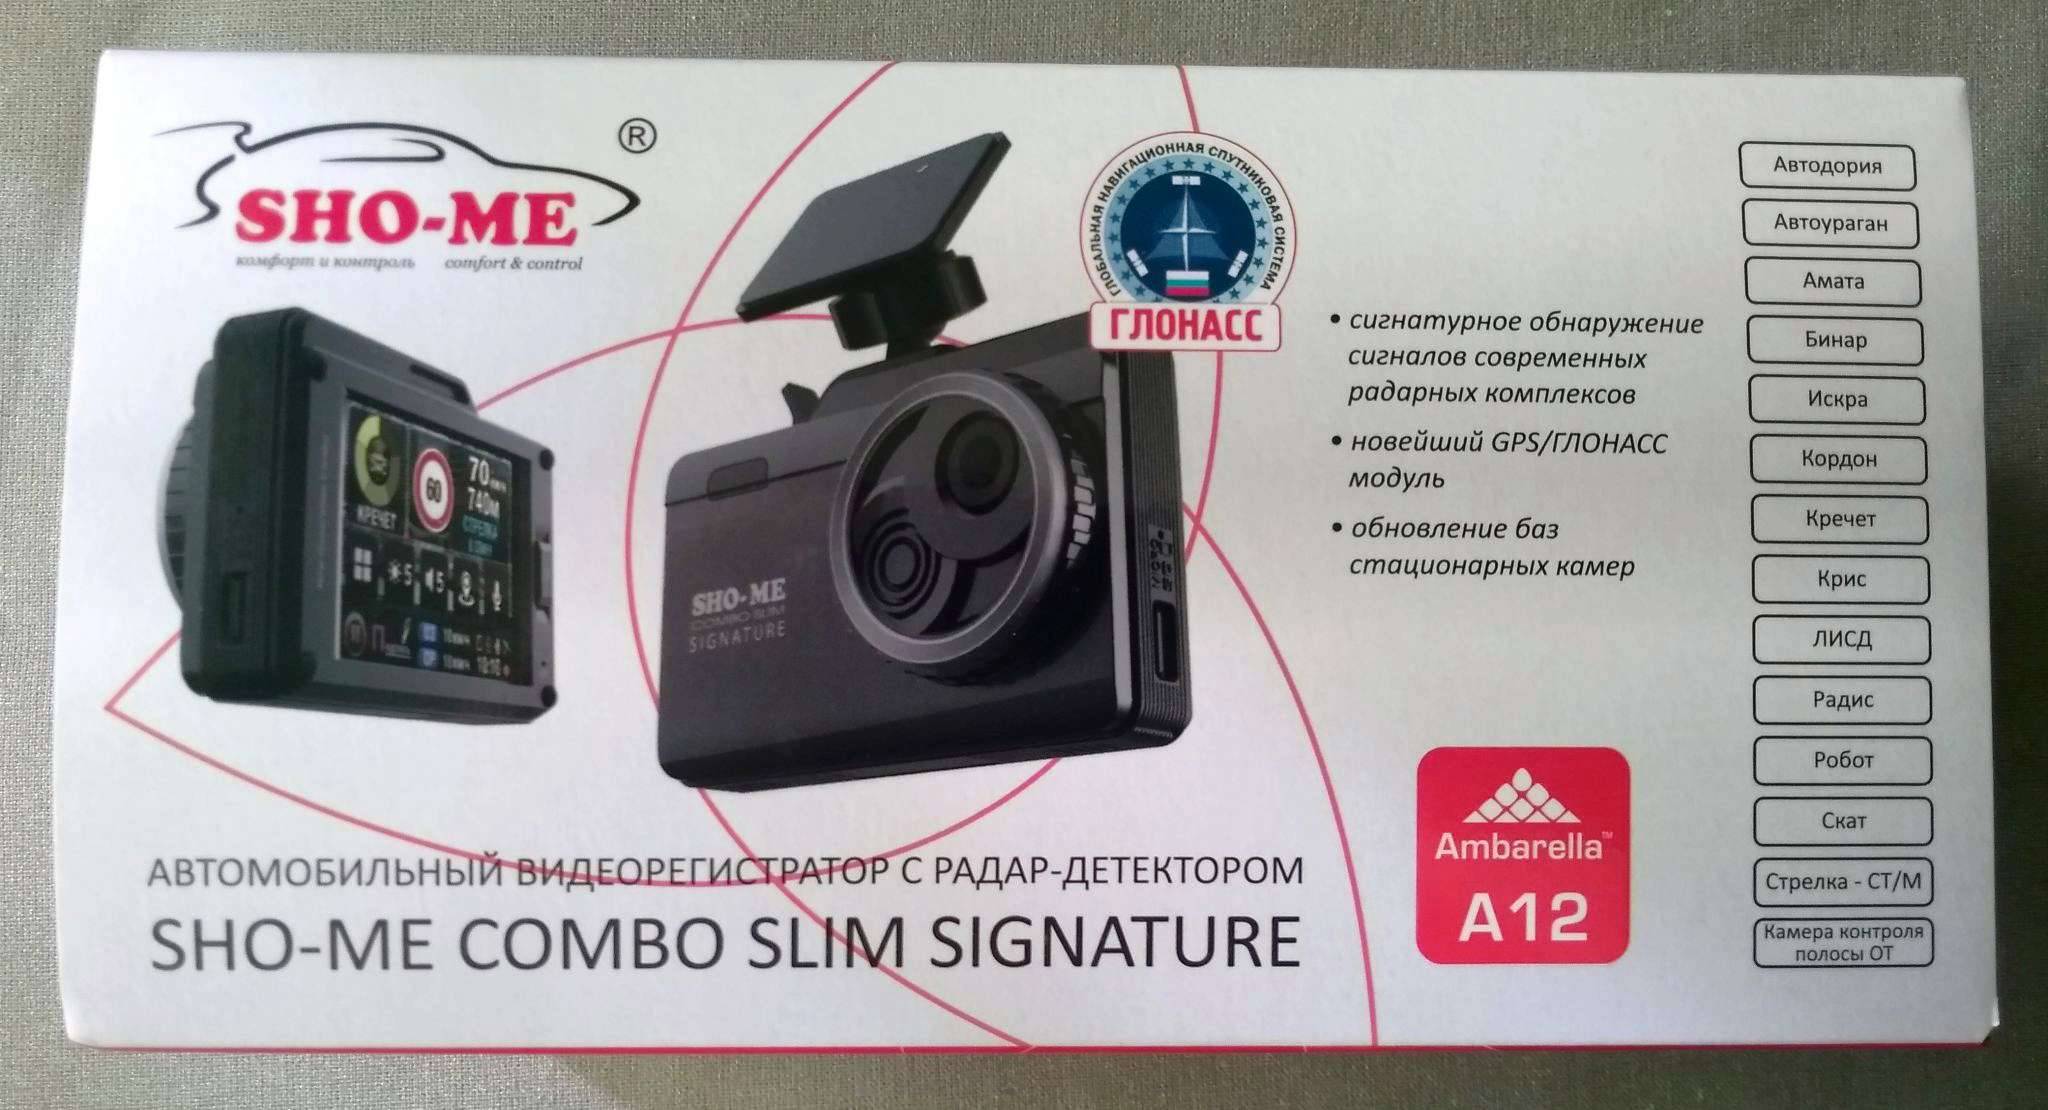 Тест видеорегистраторов с радар-детектором sho-me combo №3 a7, sho-me combo №5 а7 и subini str-gh7 - журнал движок.